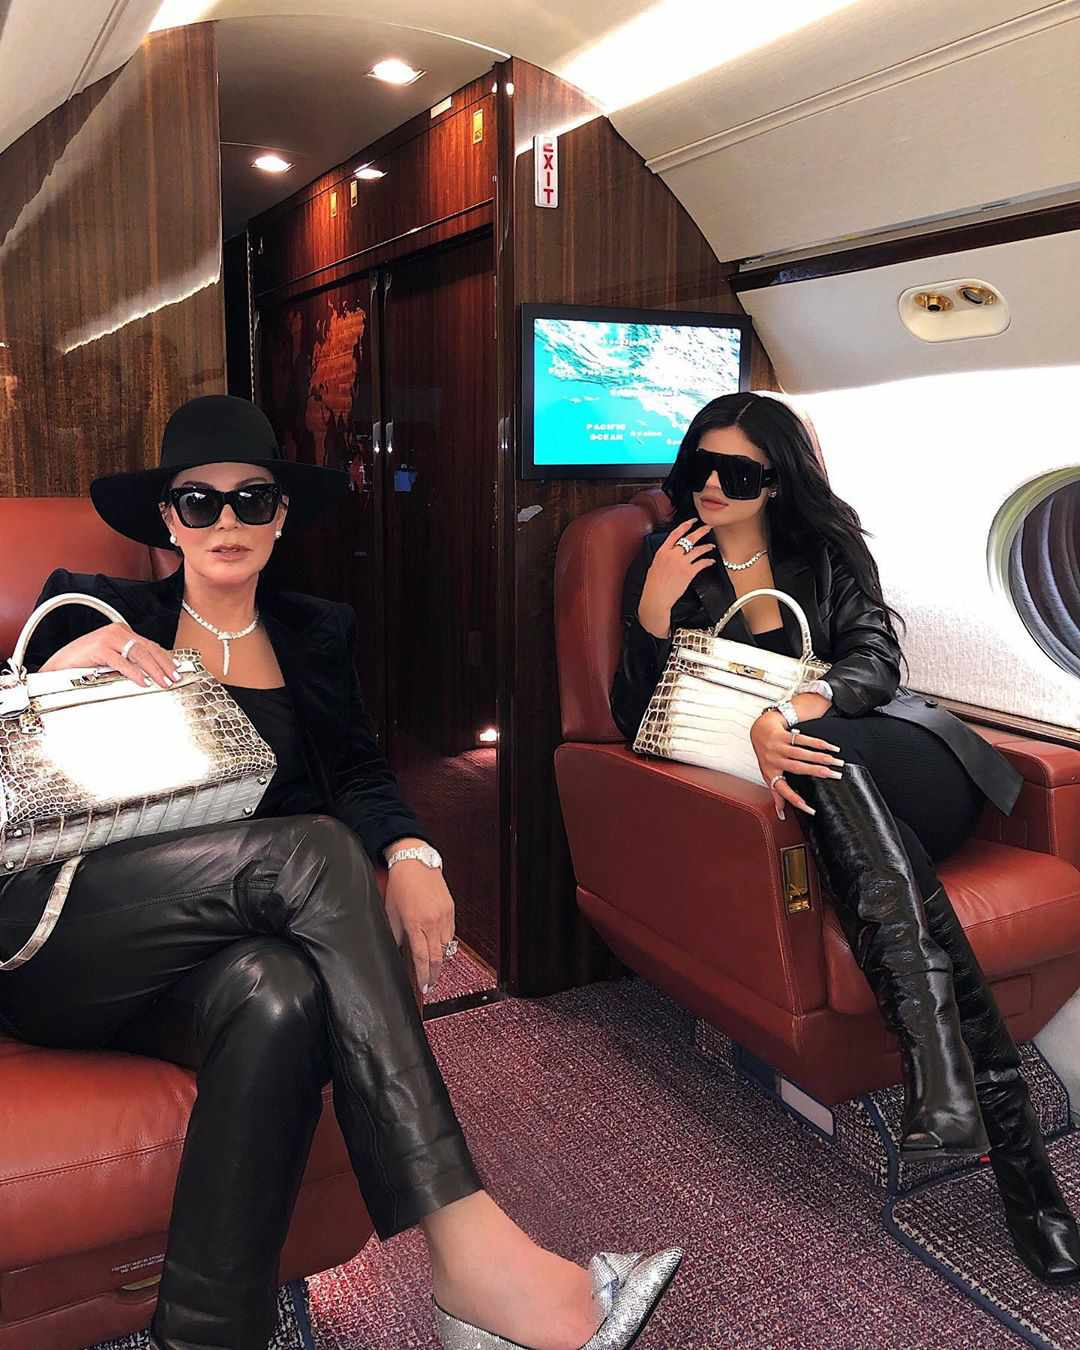 The 5 Most Expensive Kardashian-Jenner Designer Handbags